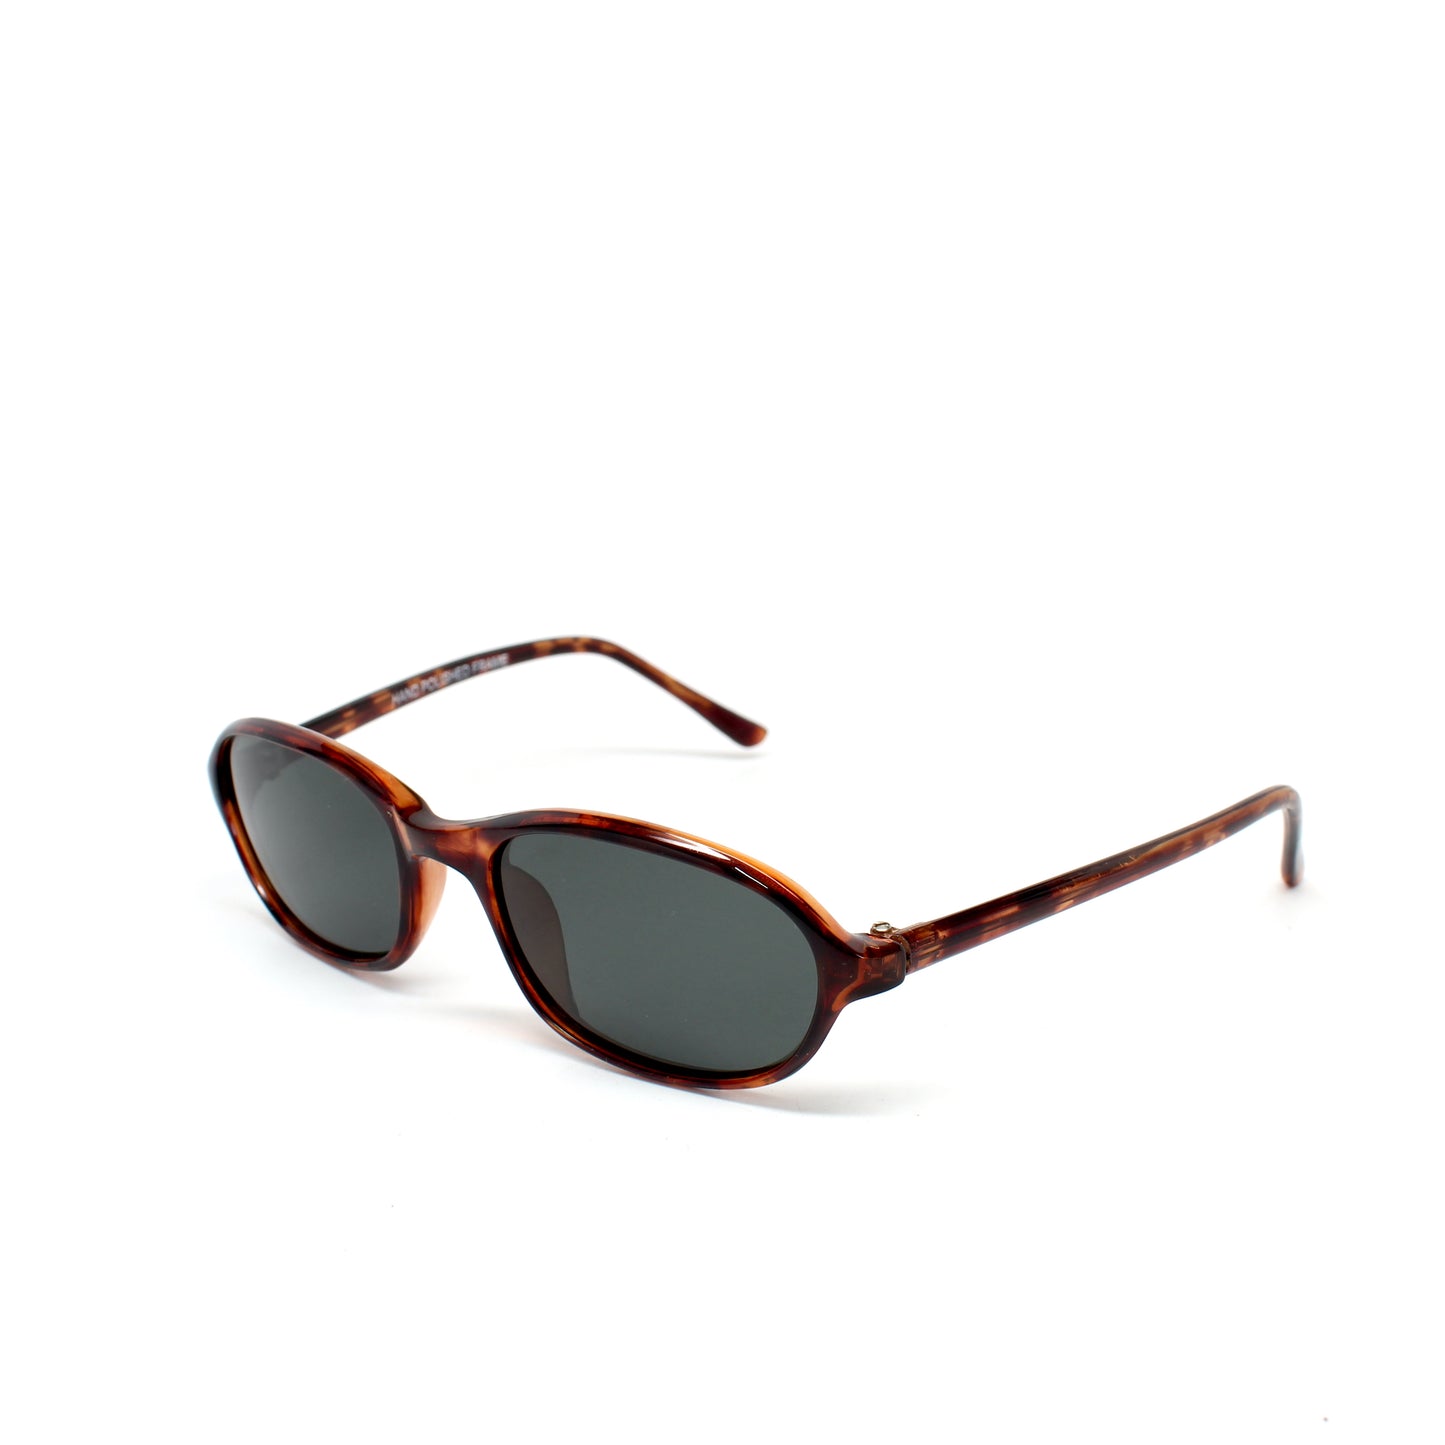 Vintage Standard Size 90s Deadstock Oval Frame Sunglasses - Tortoise